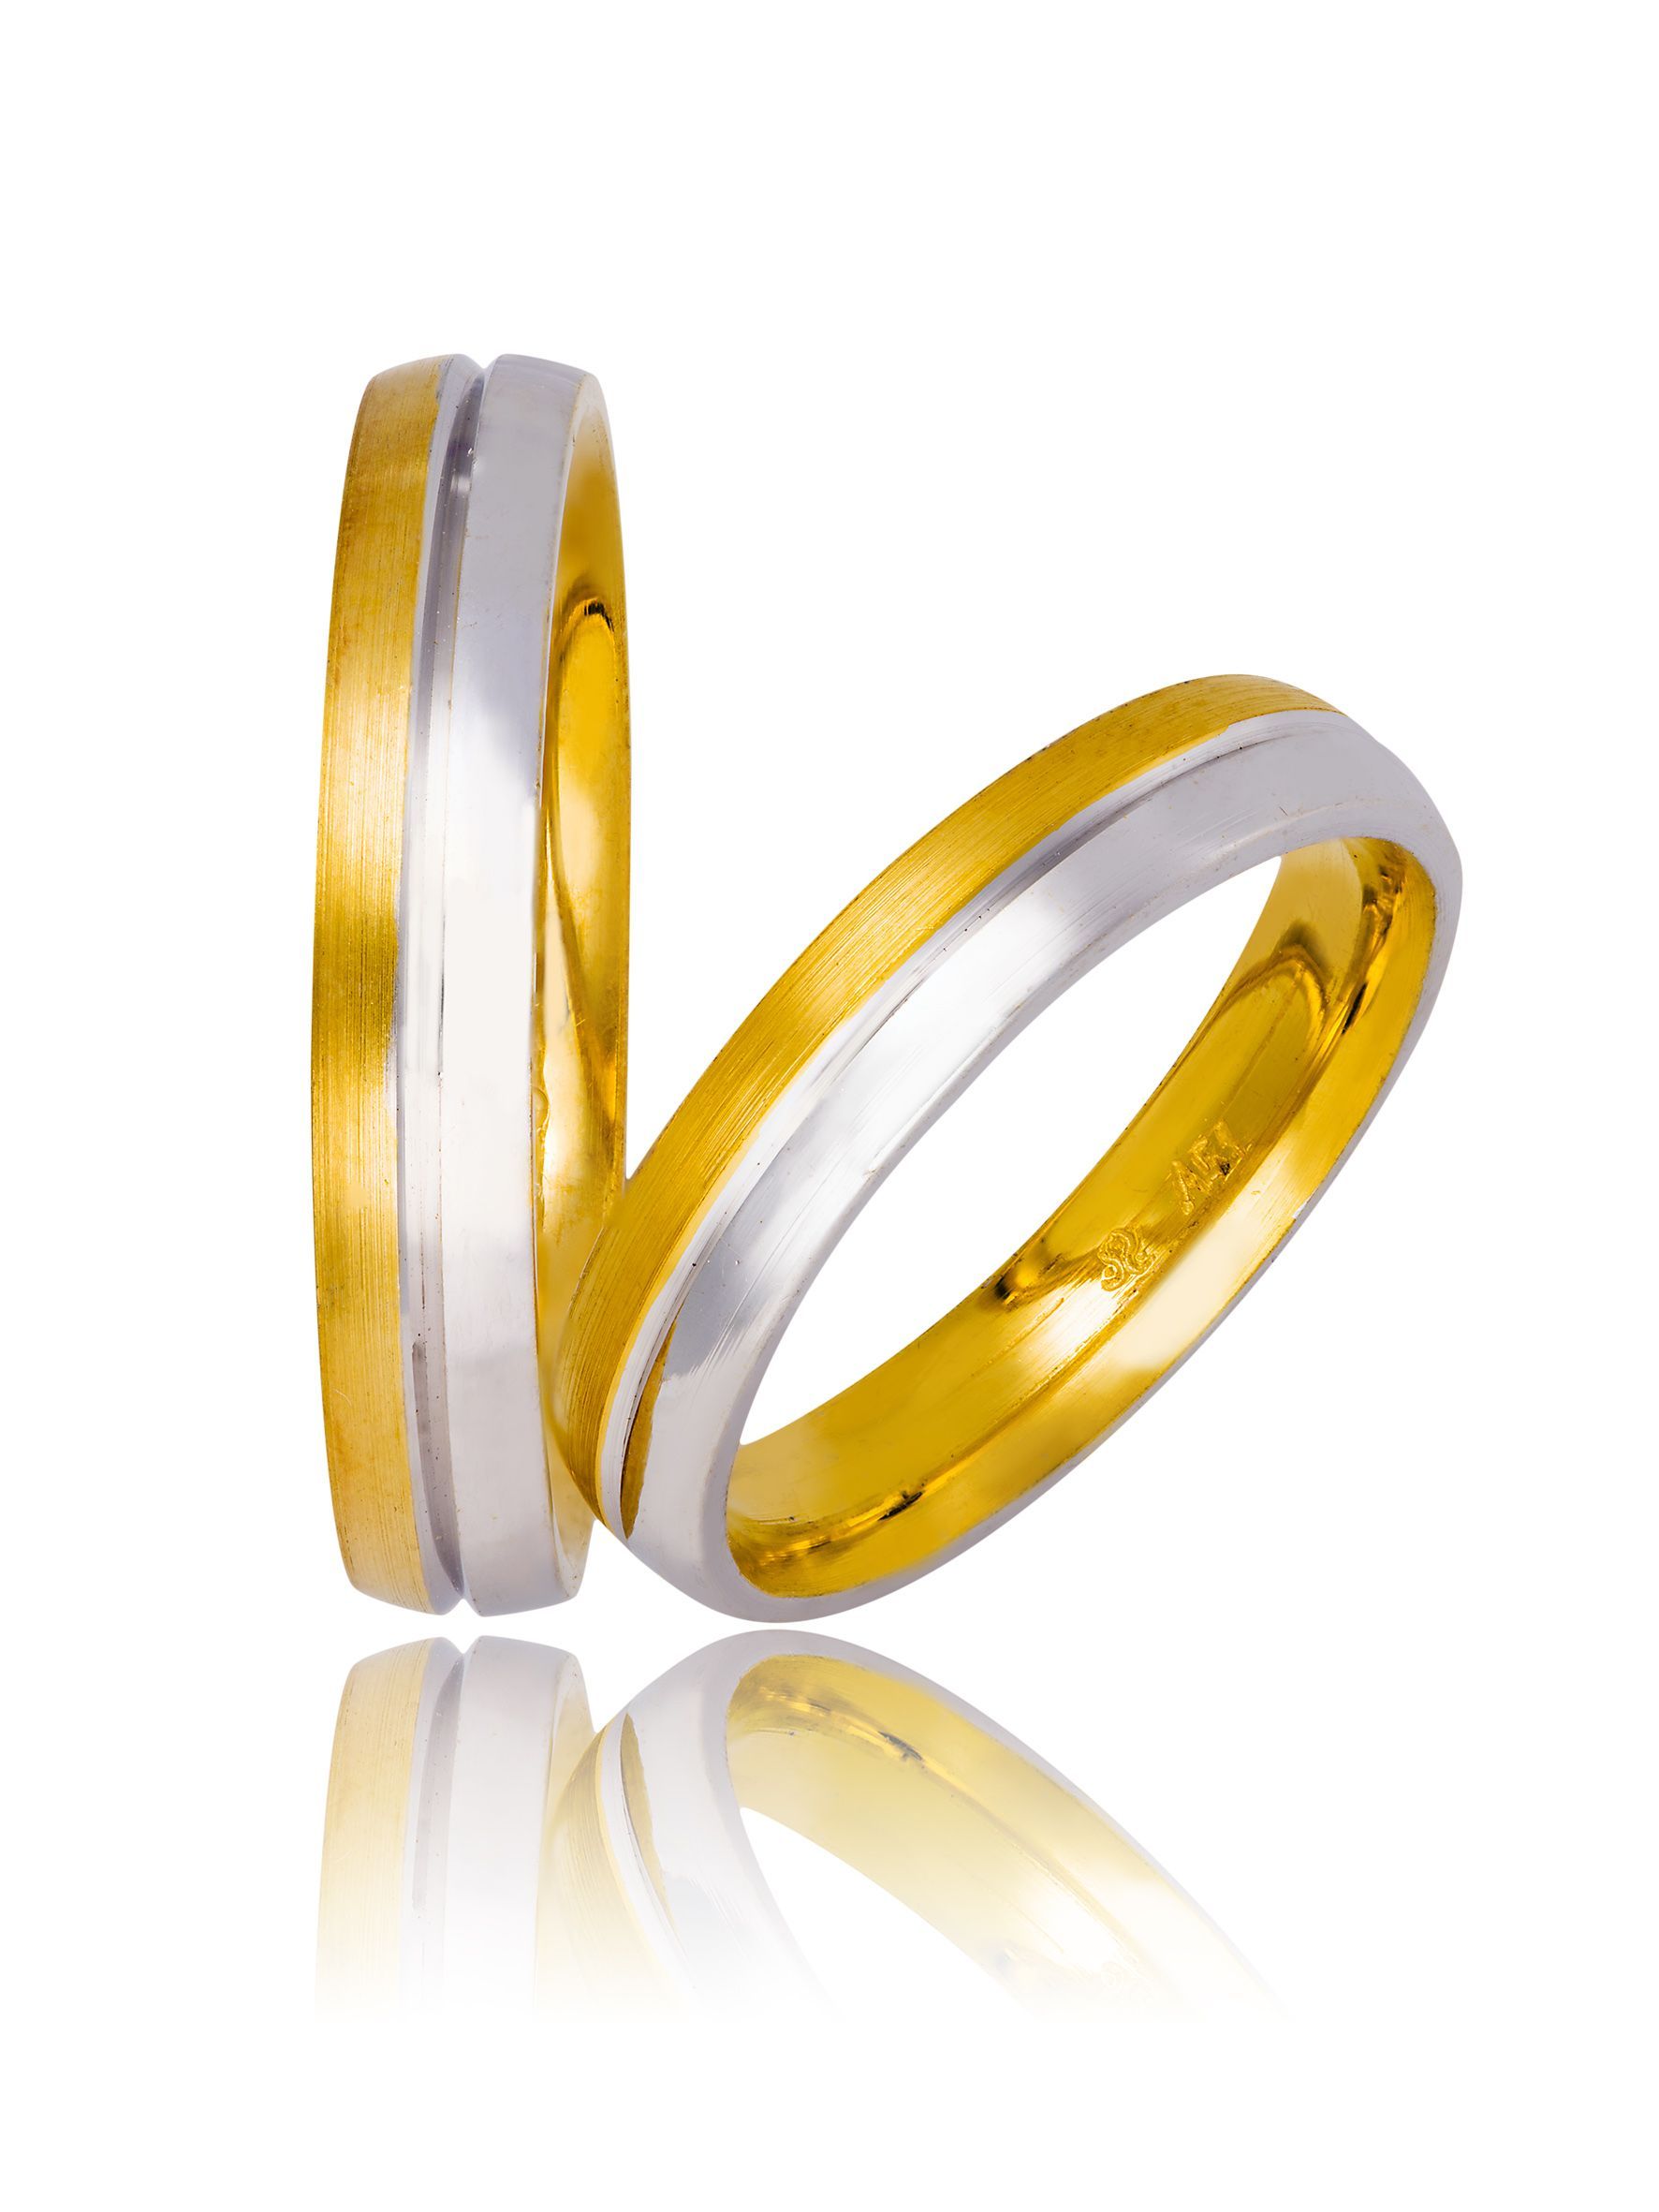 White gold & gold wedding rings 4mm (code 733)